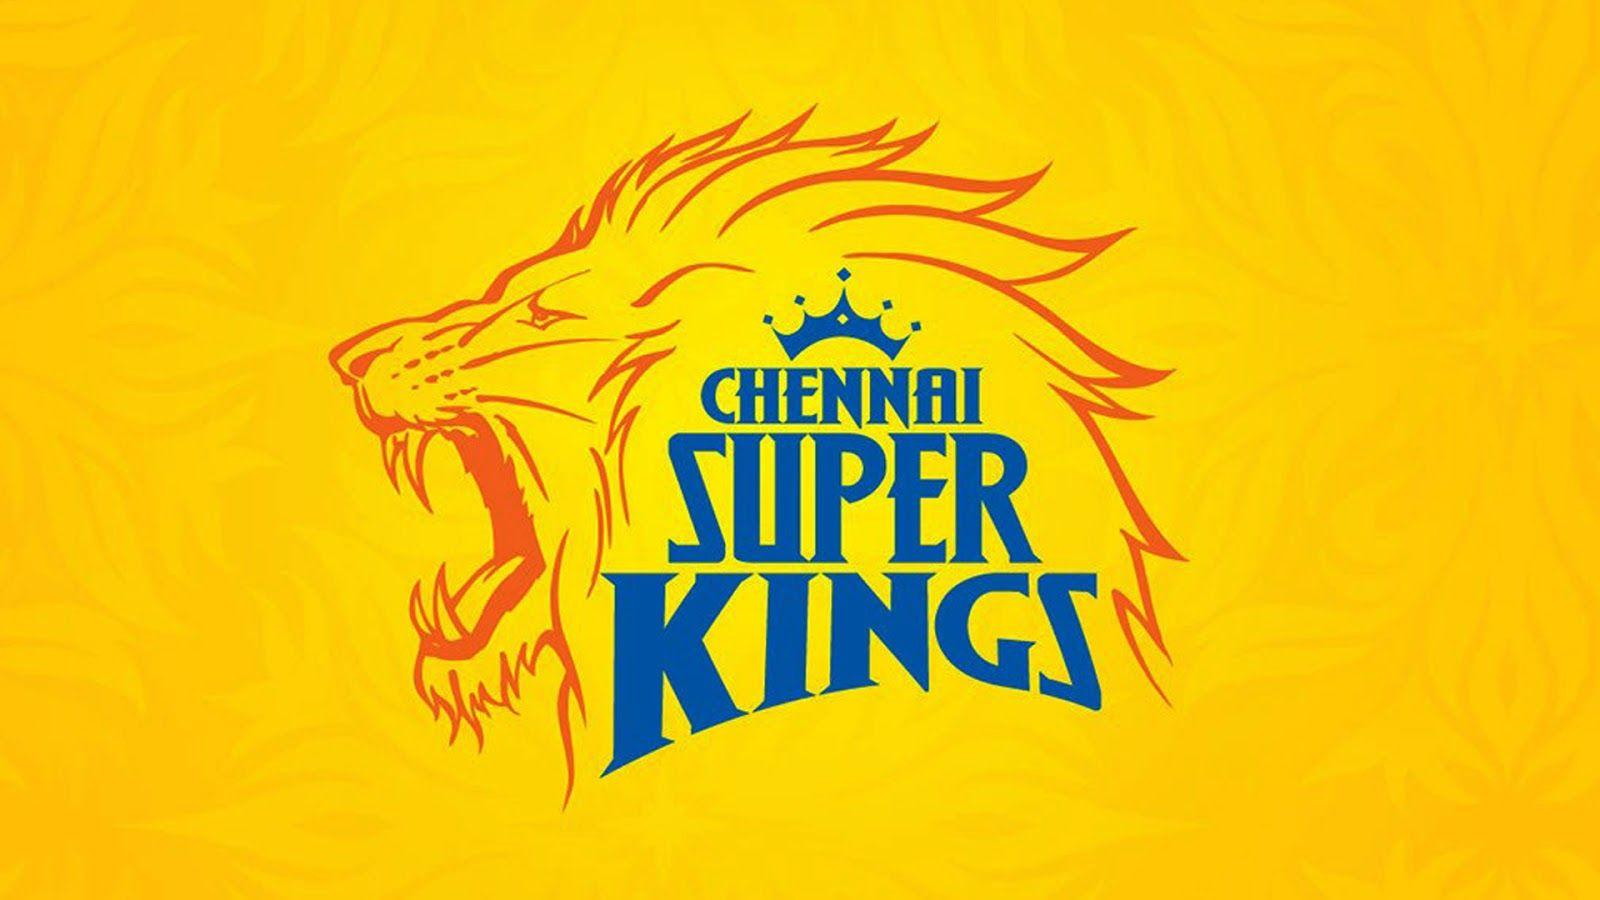 Chennai Super Kings HD Wallpaper Download Free 1080p. Chennai